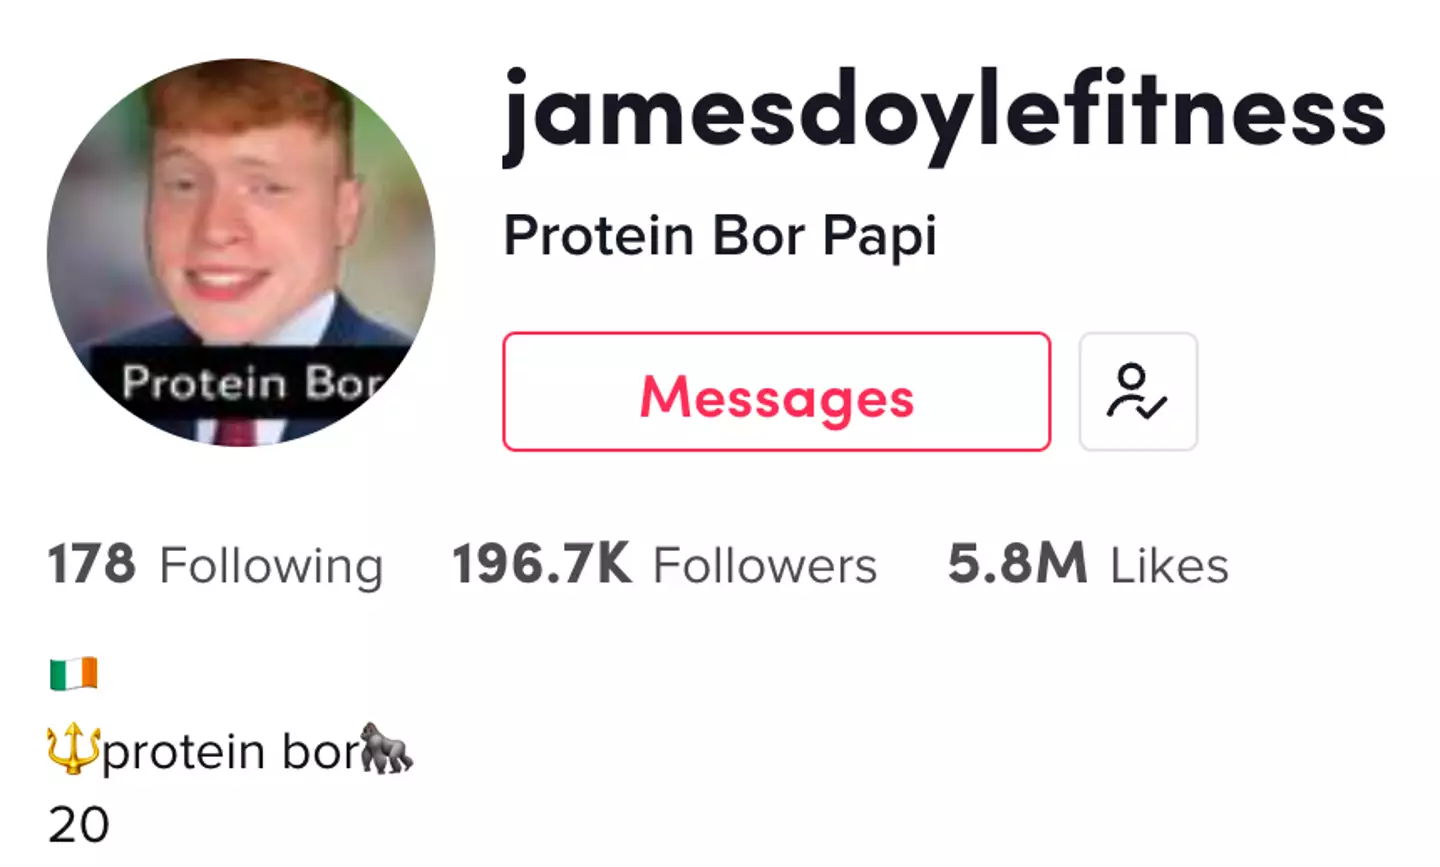 James' profile has risen dramatically.